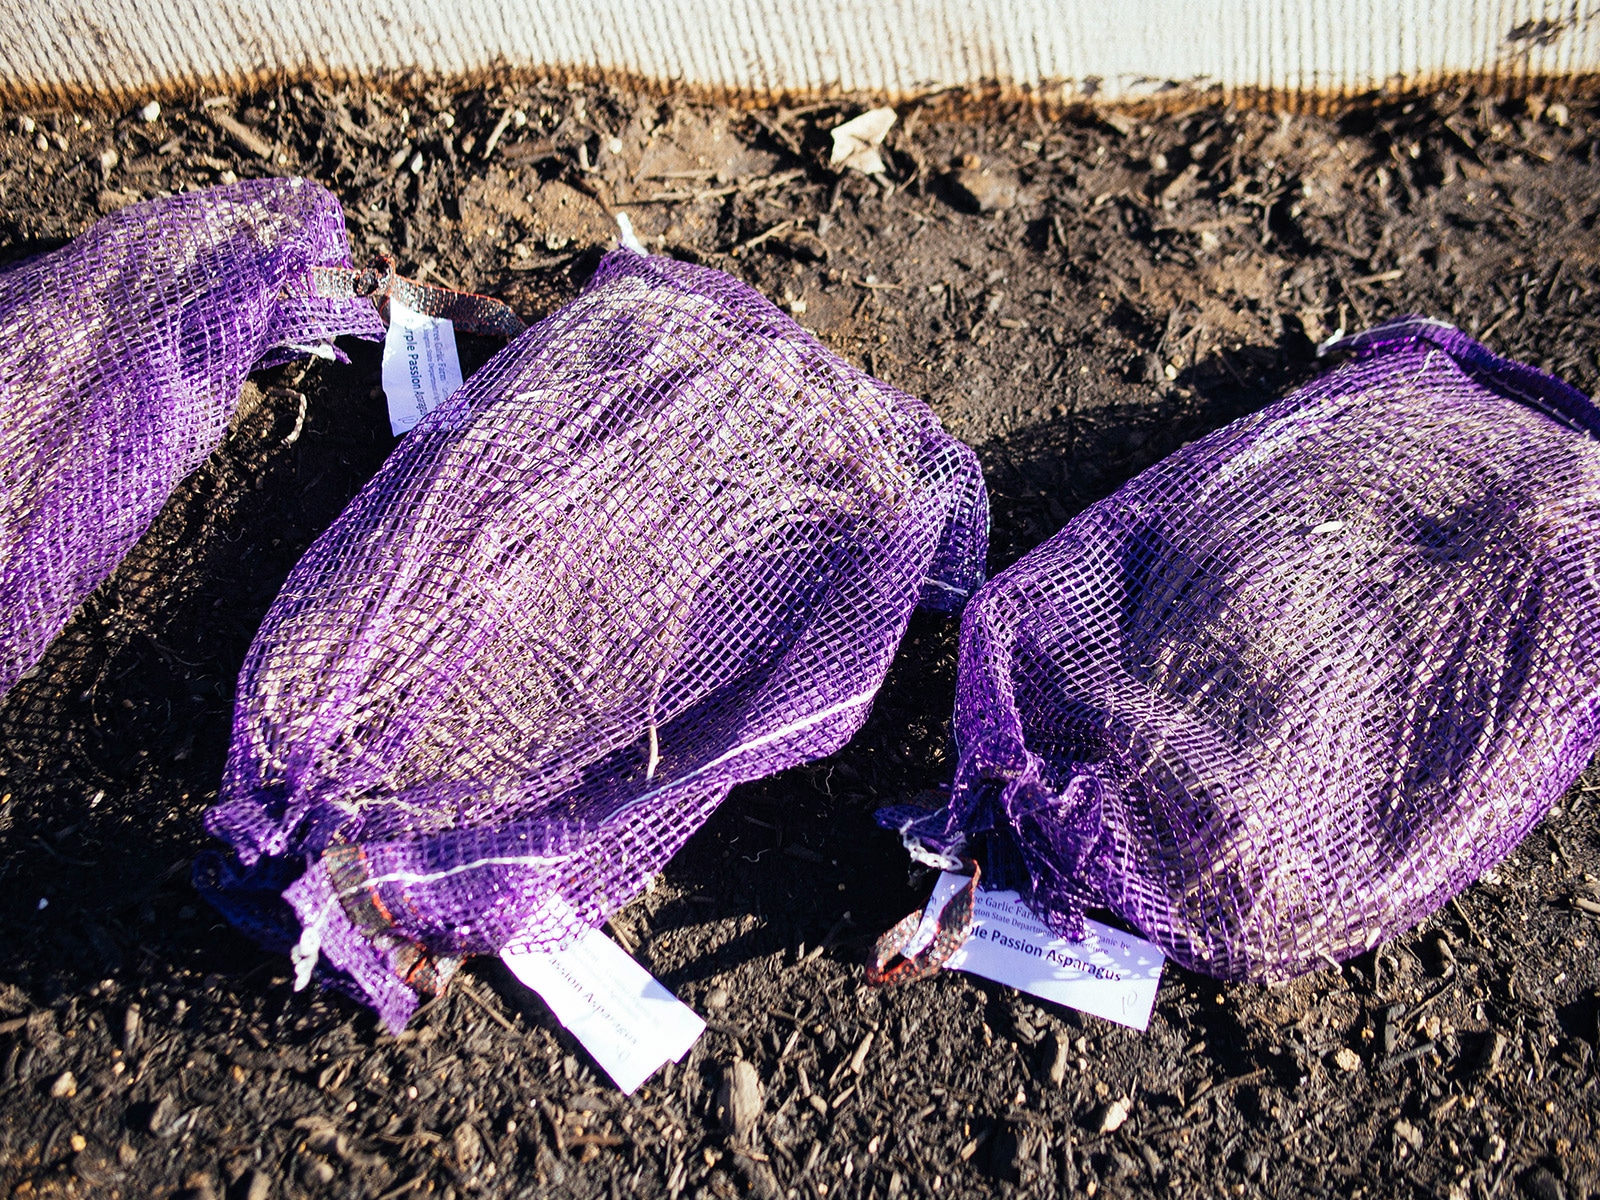 Asparagus crowns bundled inside purple mesh bags